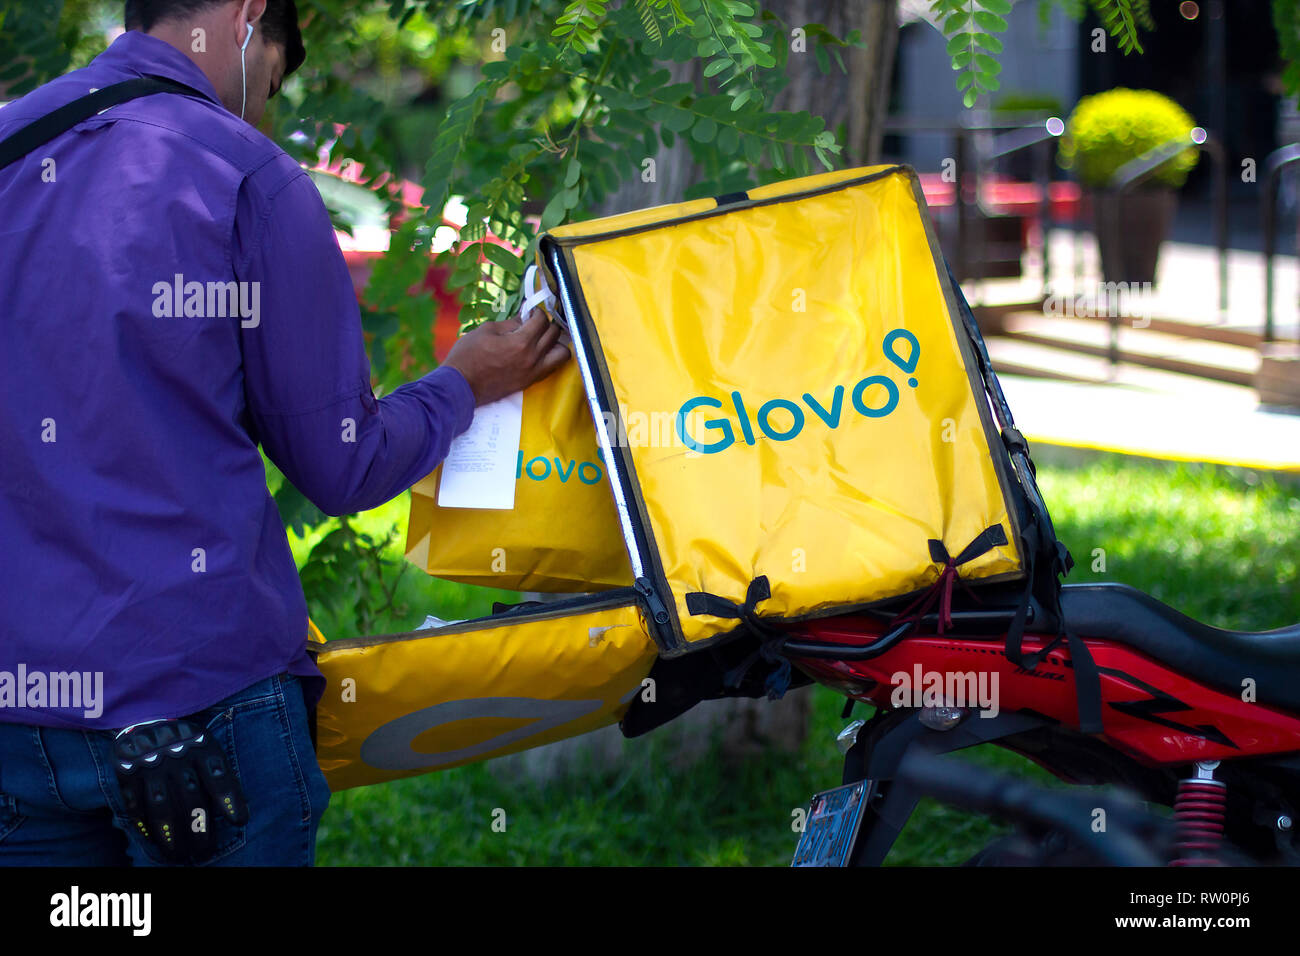 https://c8.alamy.com/comp/RW0PJ6/lima-peru-march-3-2019-man-putting-bags-inside-a-glovo-box-food-delivery-service-sharing-collaborative-economy-concept-in-south-america-RW0PJ6.jpg